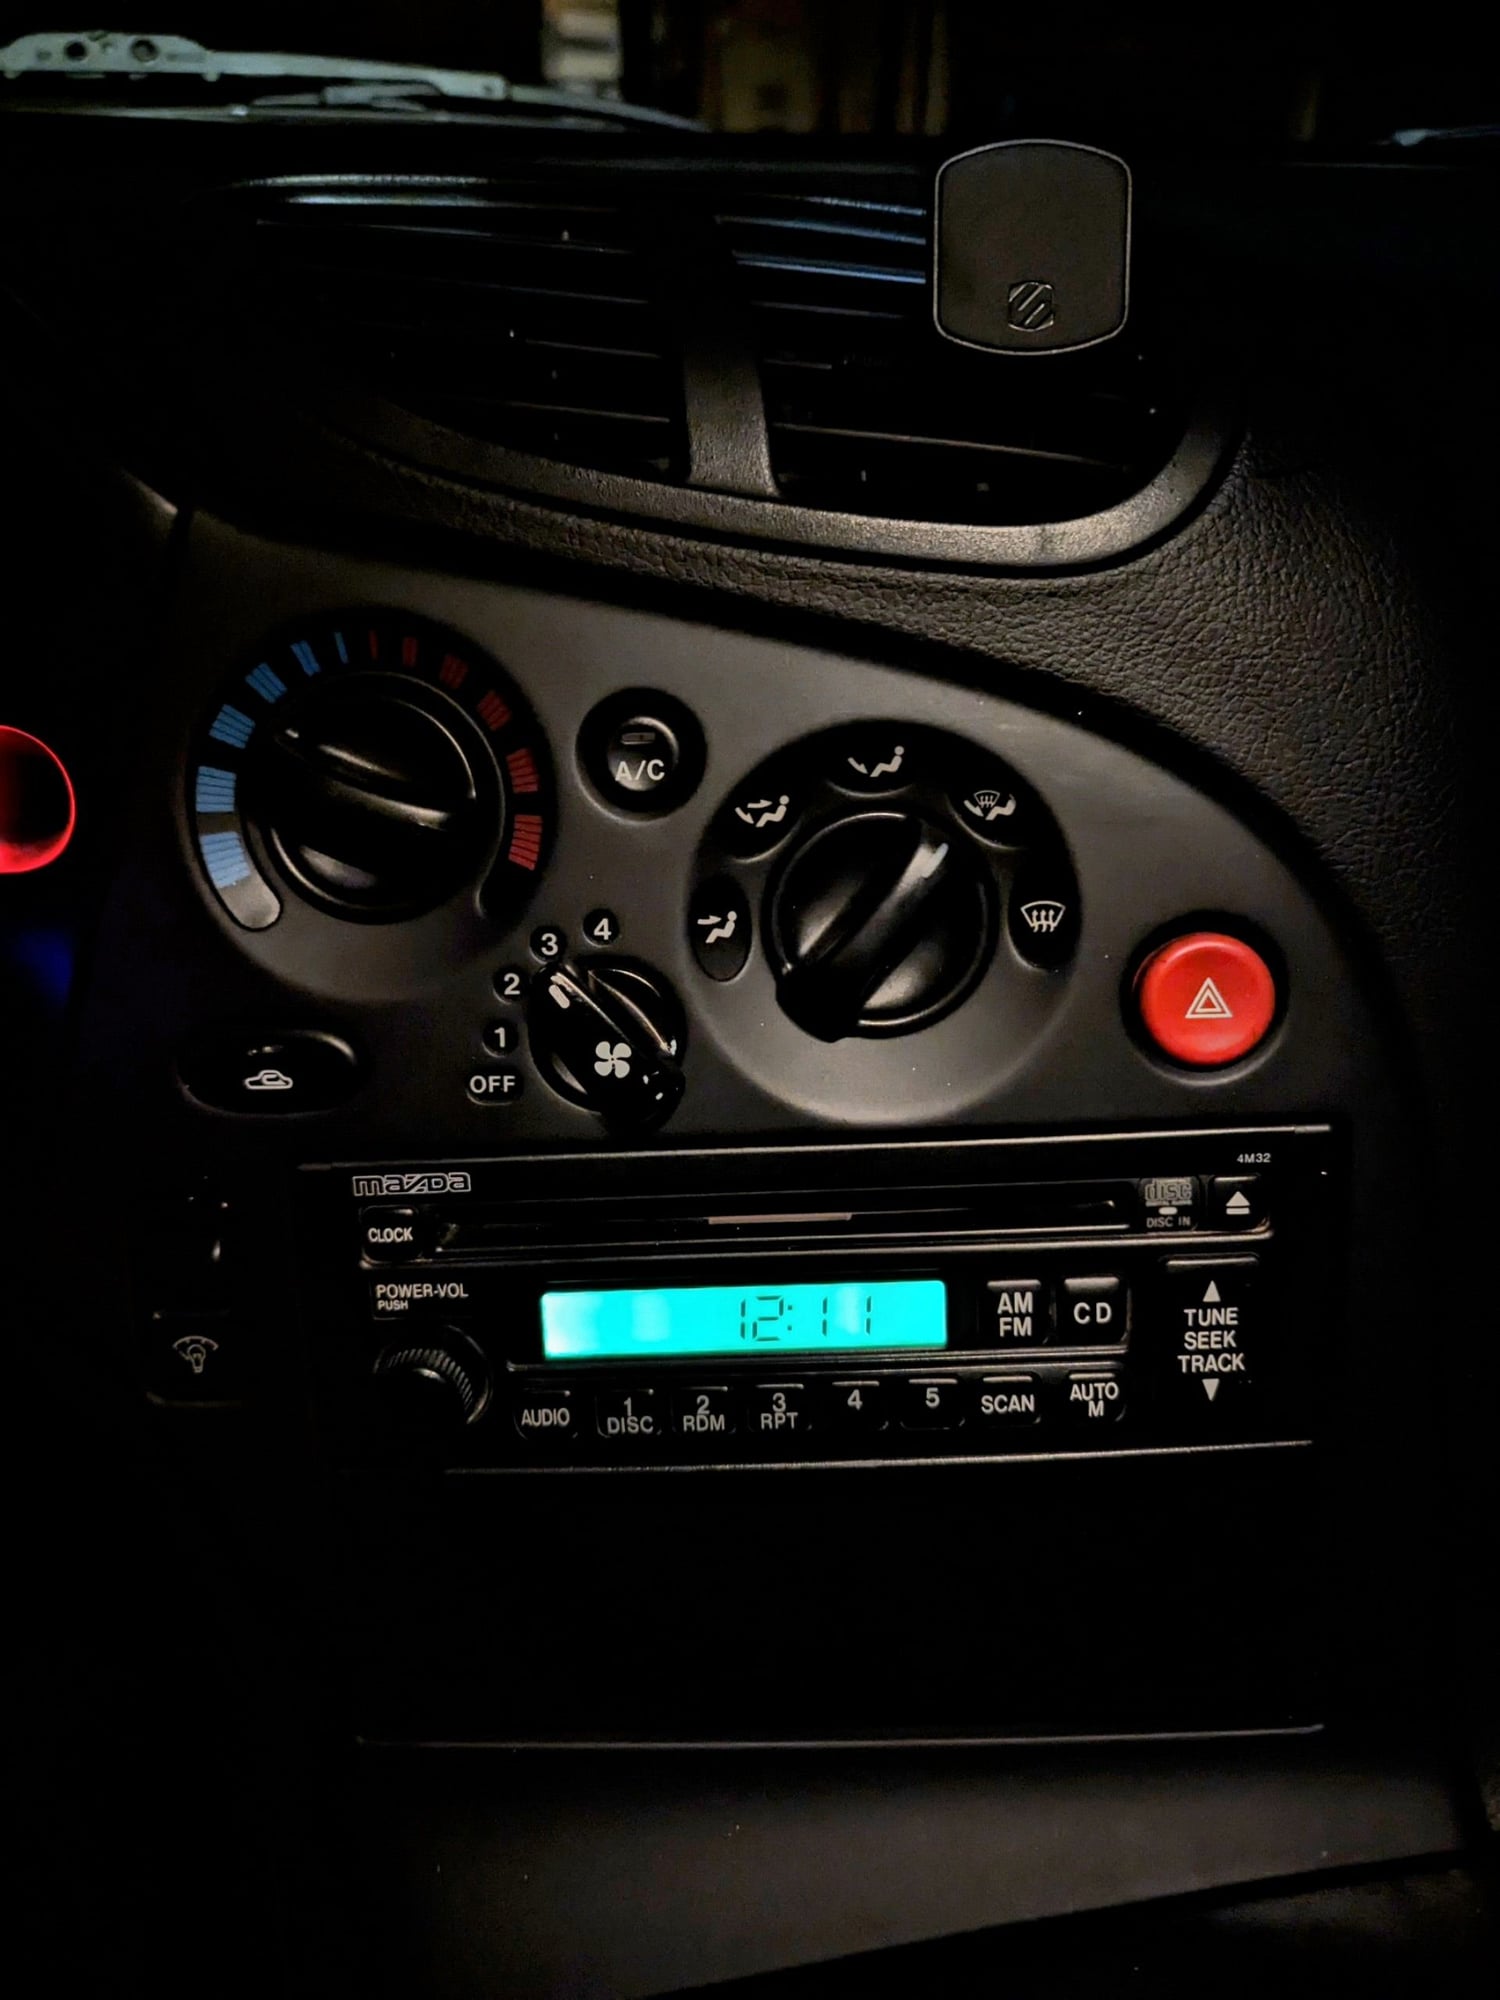 Interior/Upholstery - WTT 94+ center radio trim for 93 trim - Used - Plattsburgh, NY 12901, United States